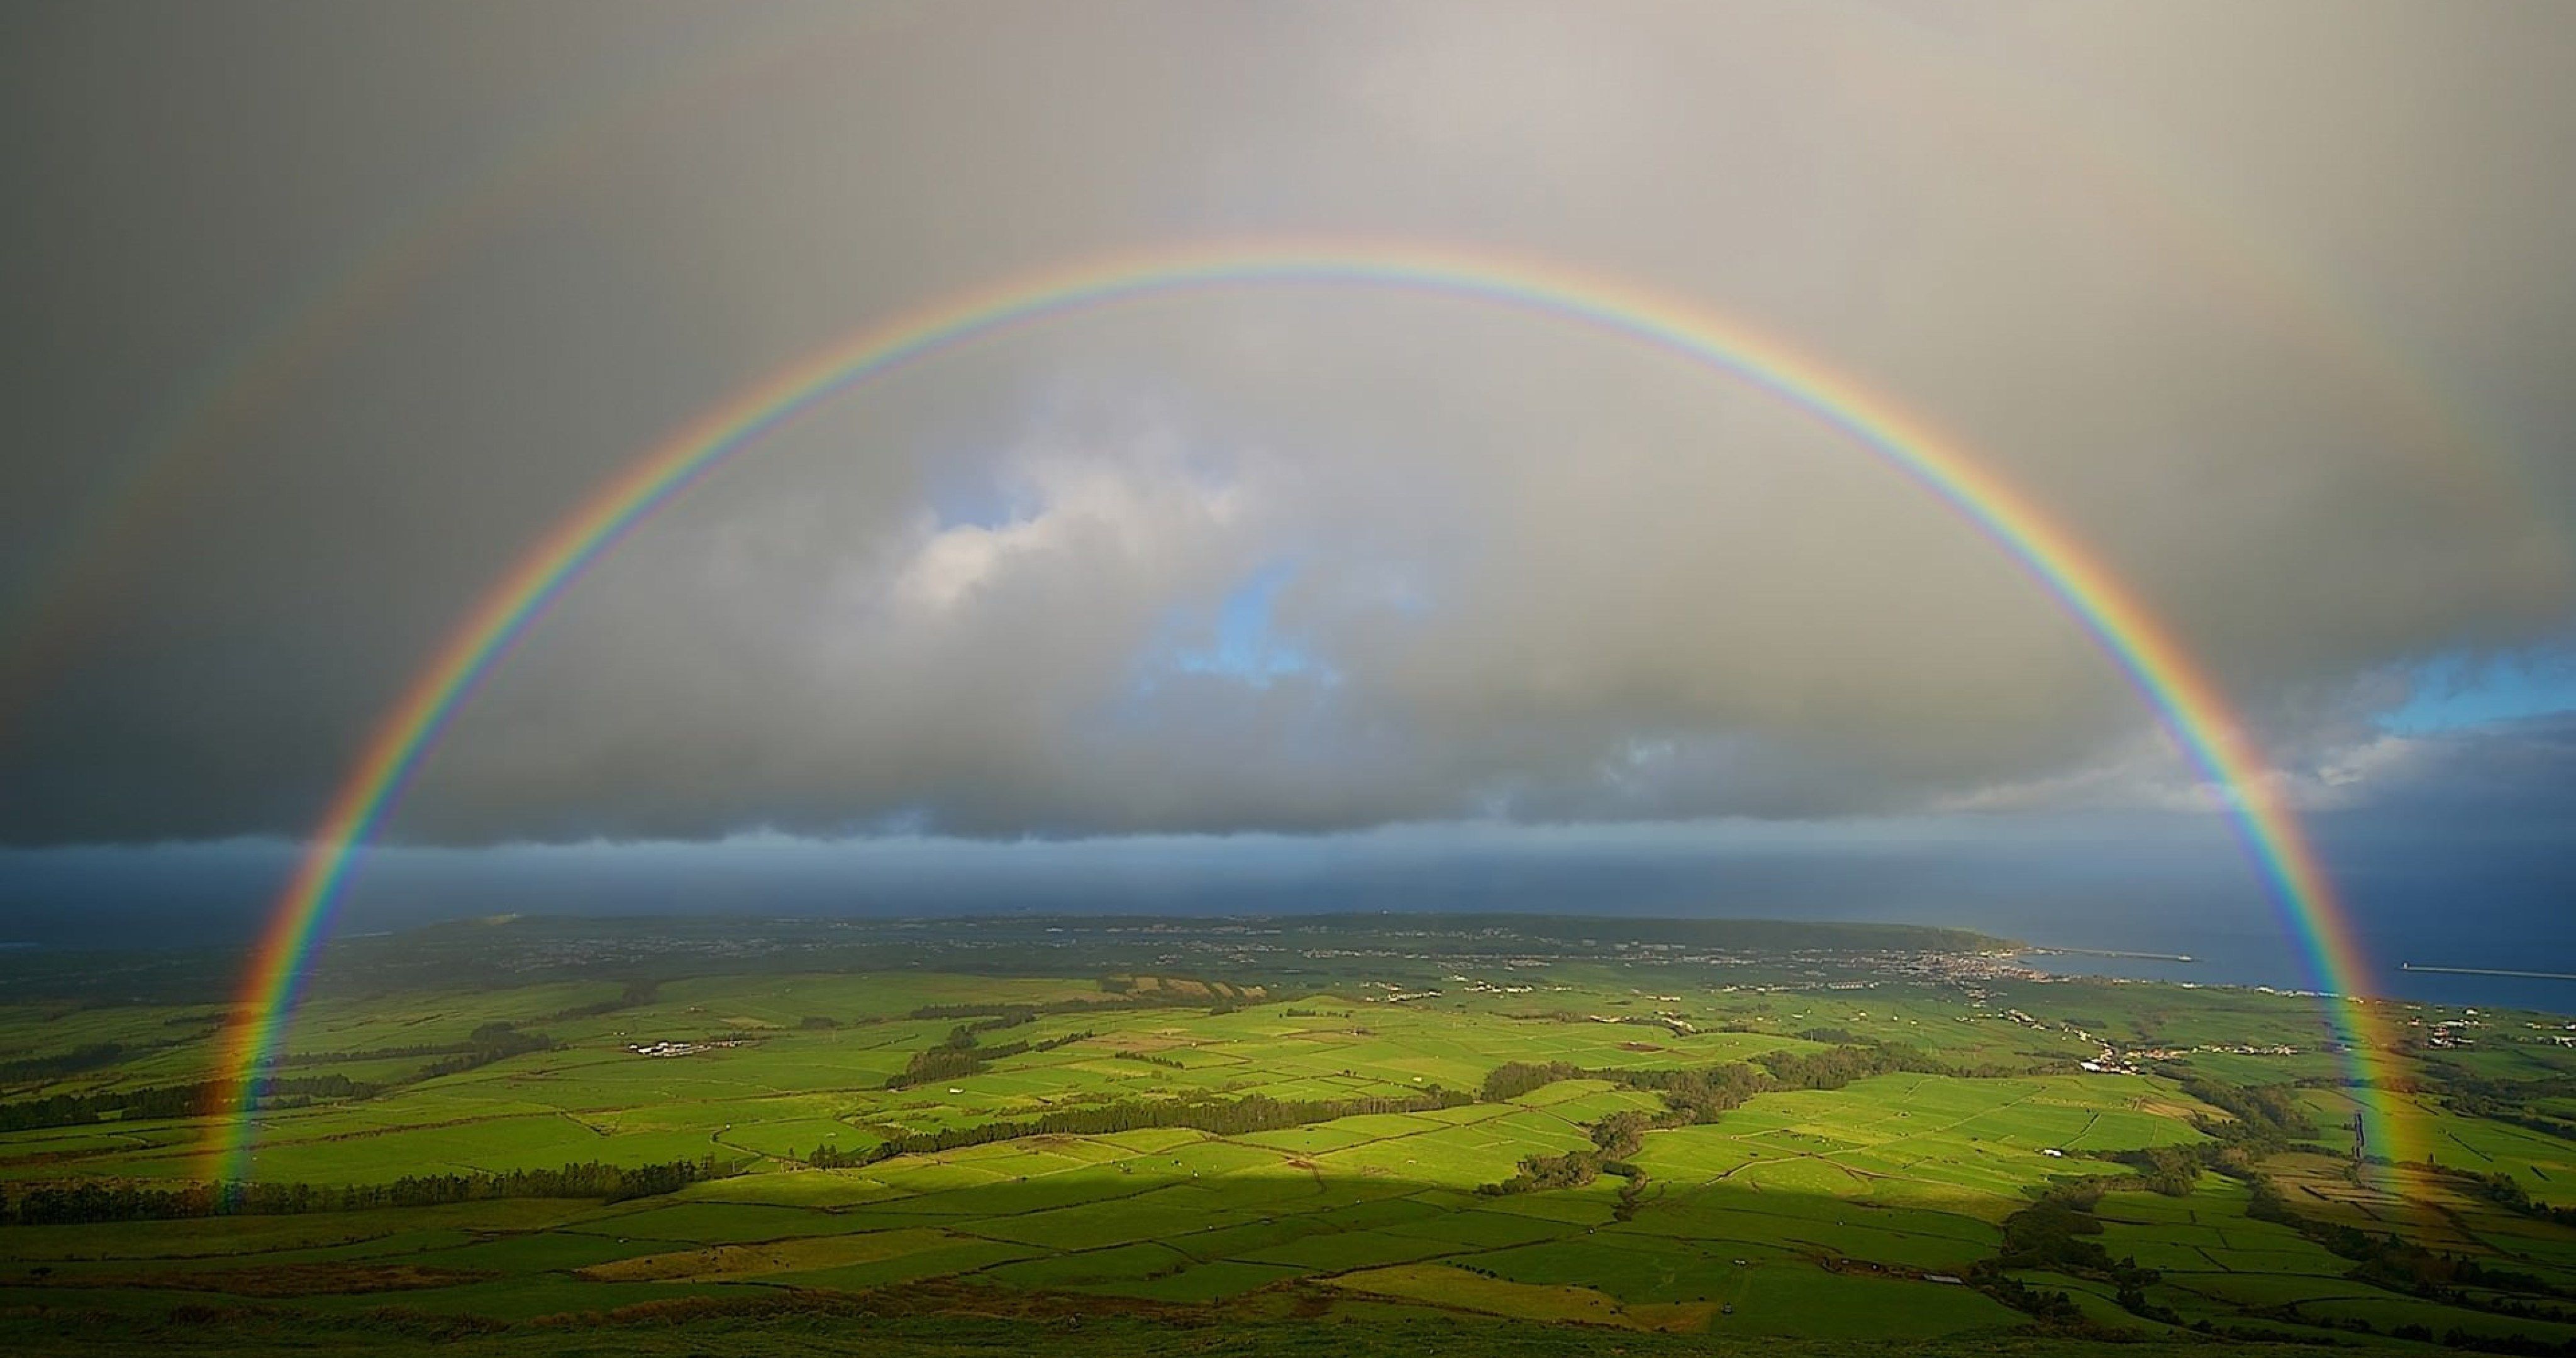 rainbow in clouds 4k ultra HD wallpaper. Sky image, Rainbow photo, Rainbow cloud